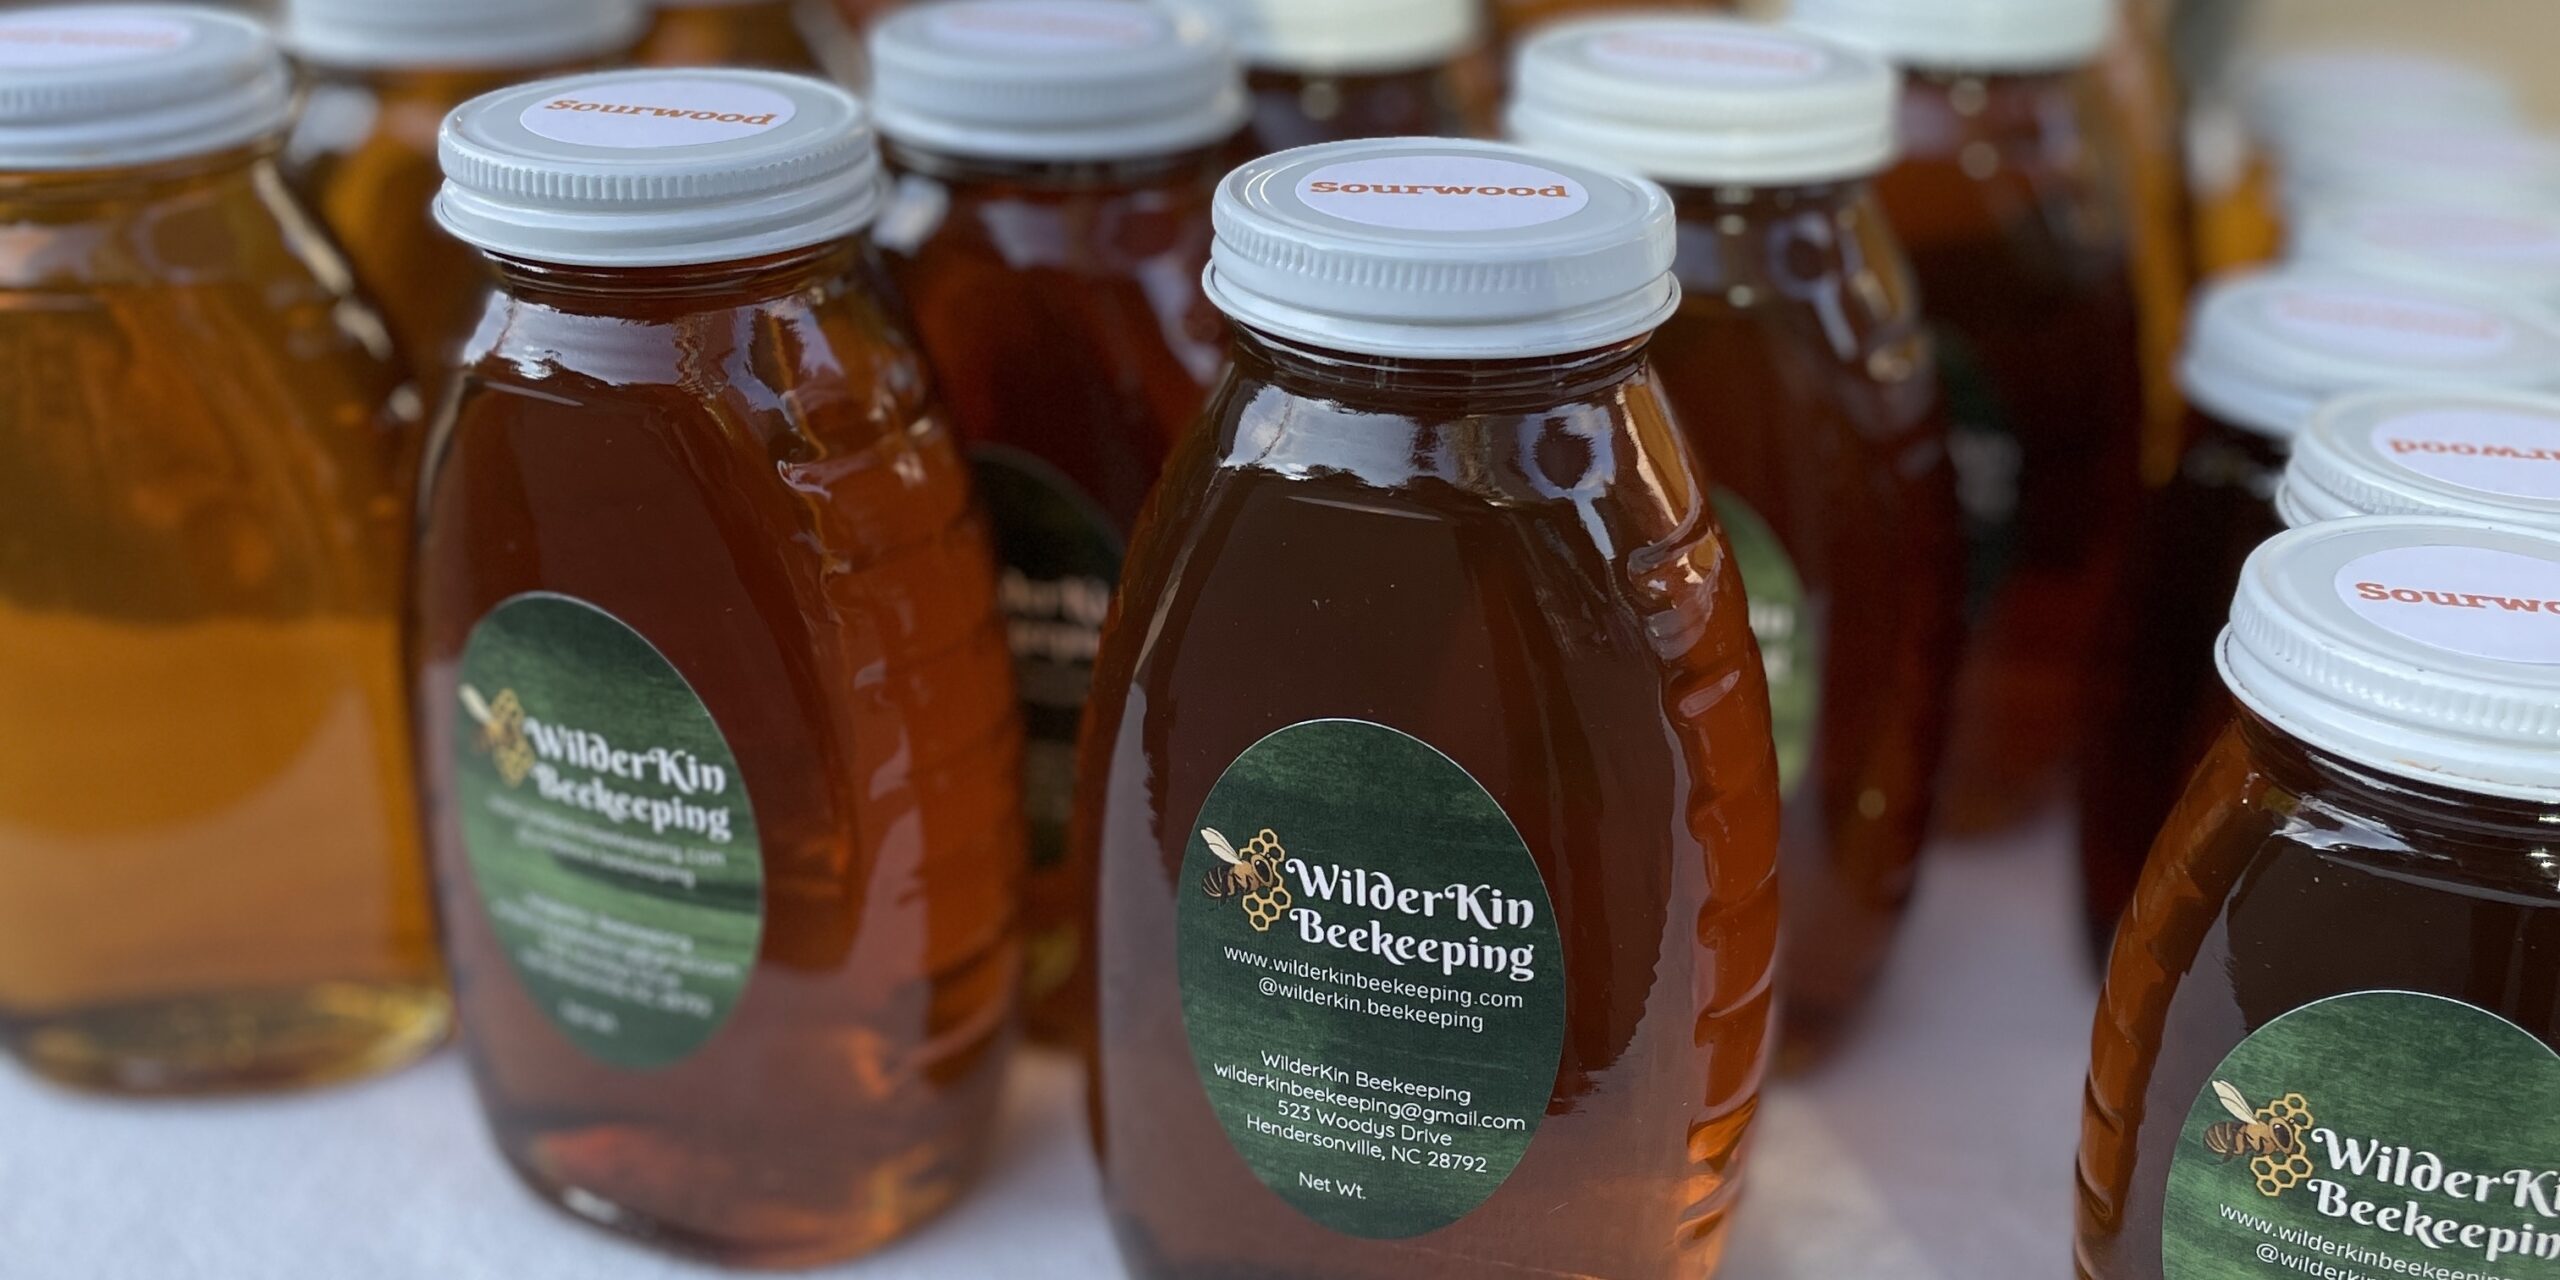 Wilderkin Beekeeping honey at Asheville City Market